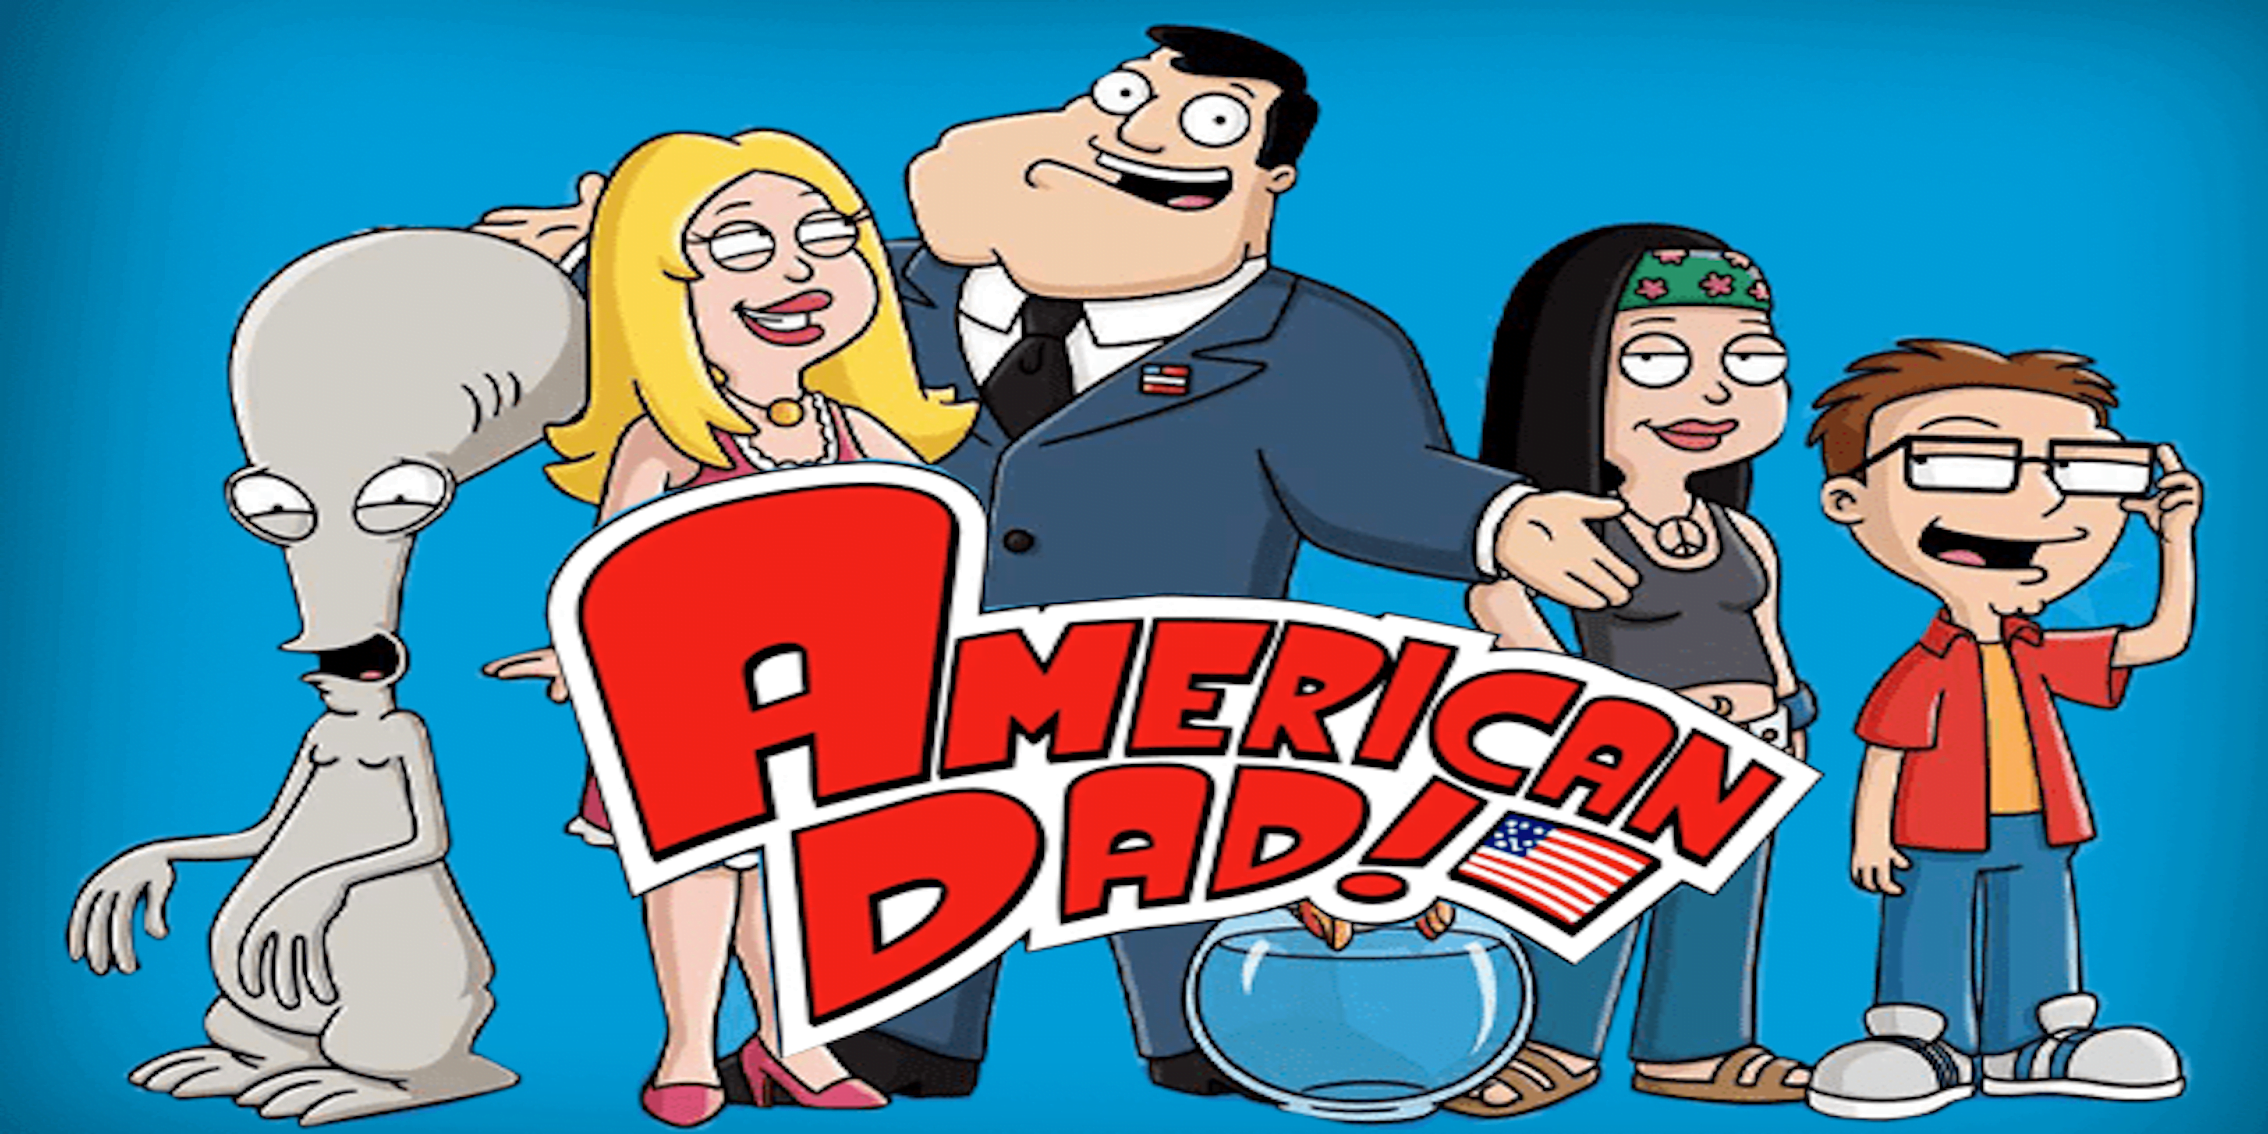 American Dad Slot